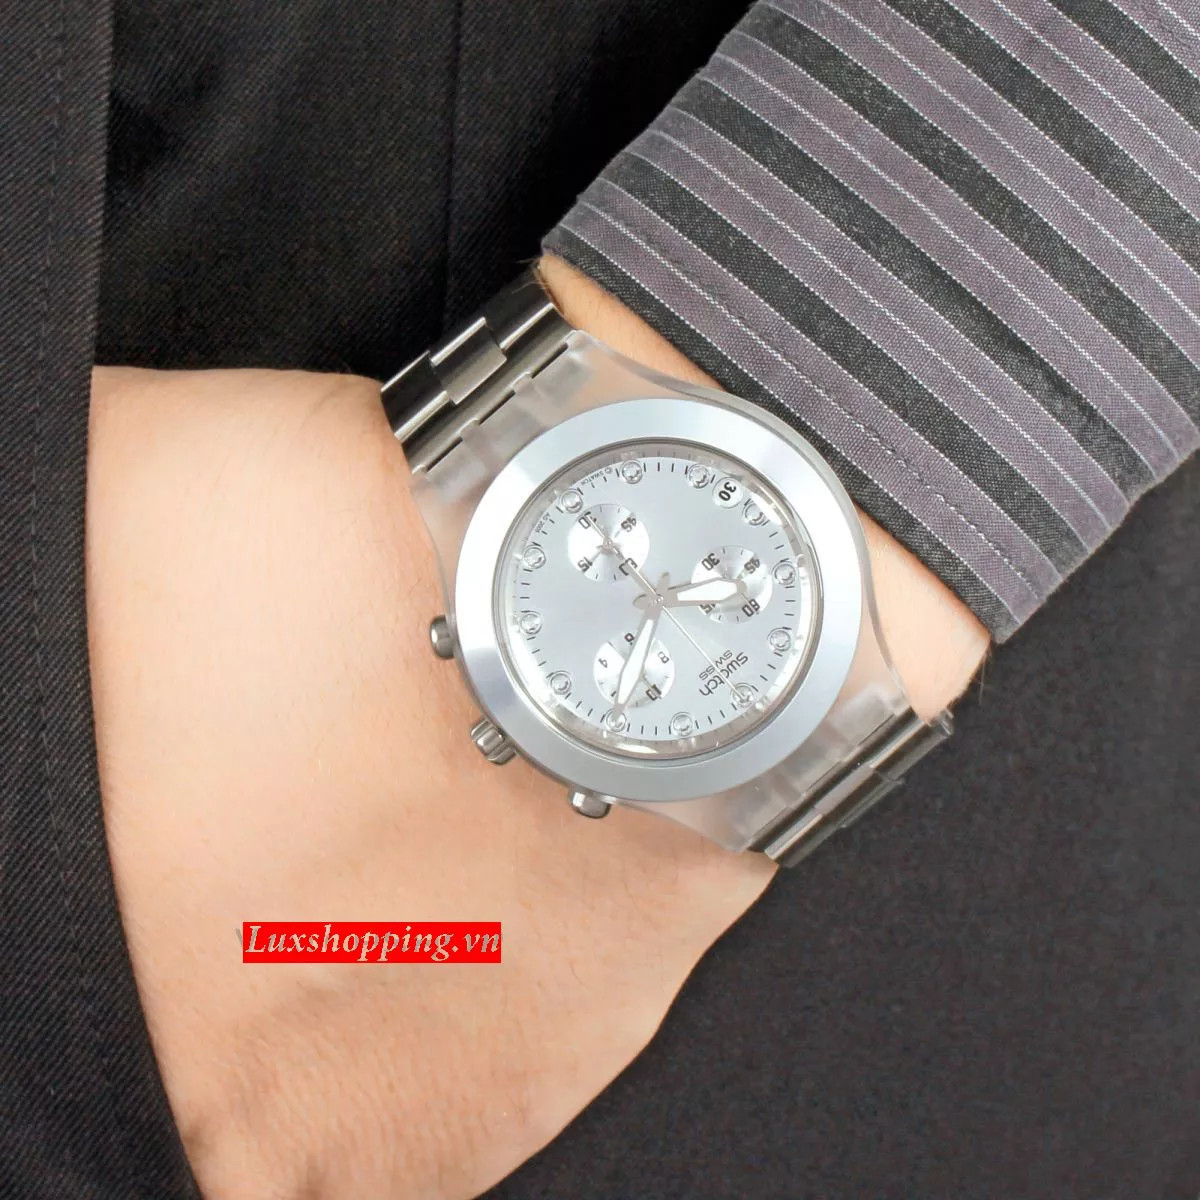 Swatch Watch, Unisex Swiss Chronograph, 43mm 